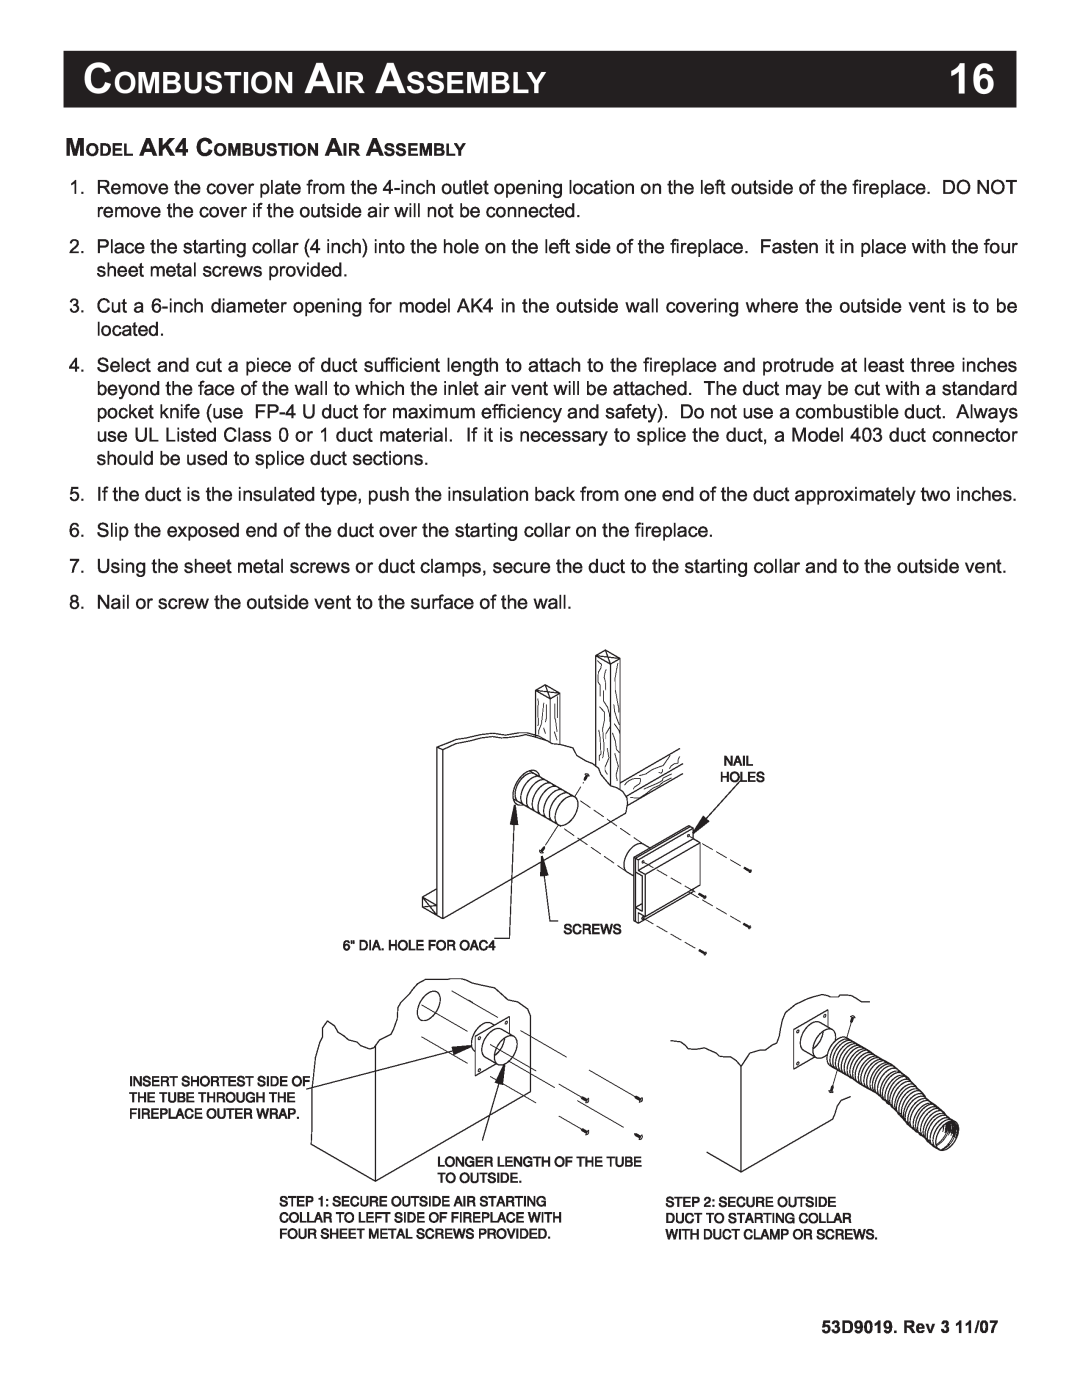 Monessen Hearth DESIGNER SERIES manual Combustion Air Assembly, MODEL AK4 COMBUSTION AIR ASSEMBLY, 53D9019. Rev 3 11/07 